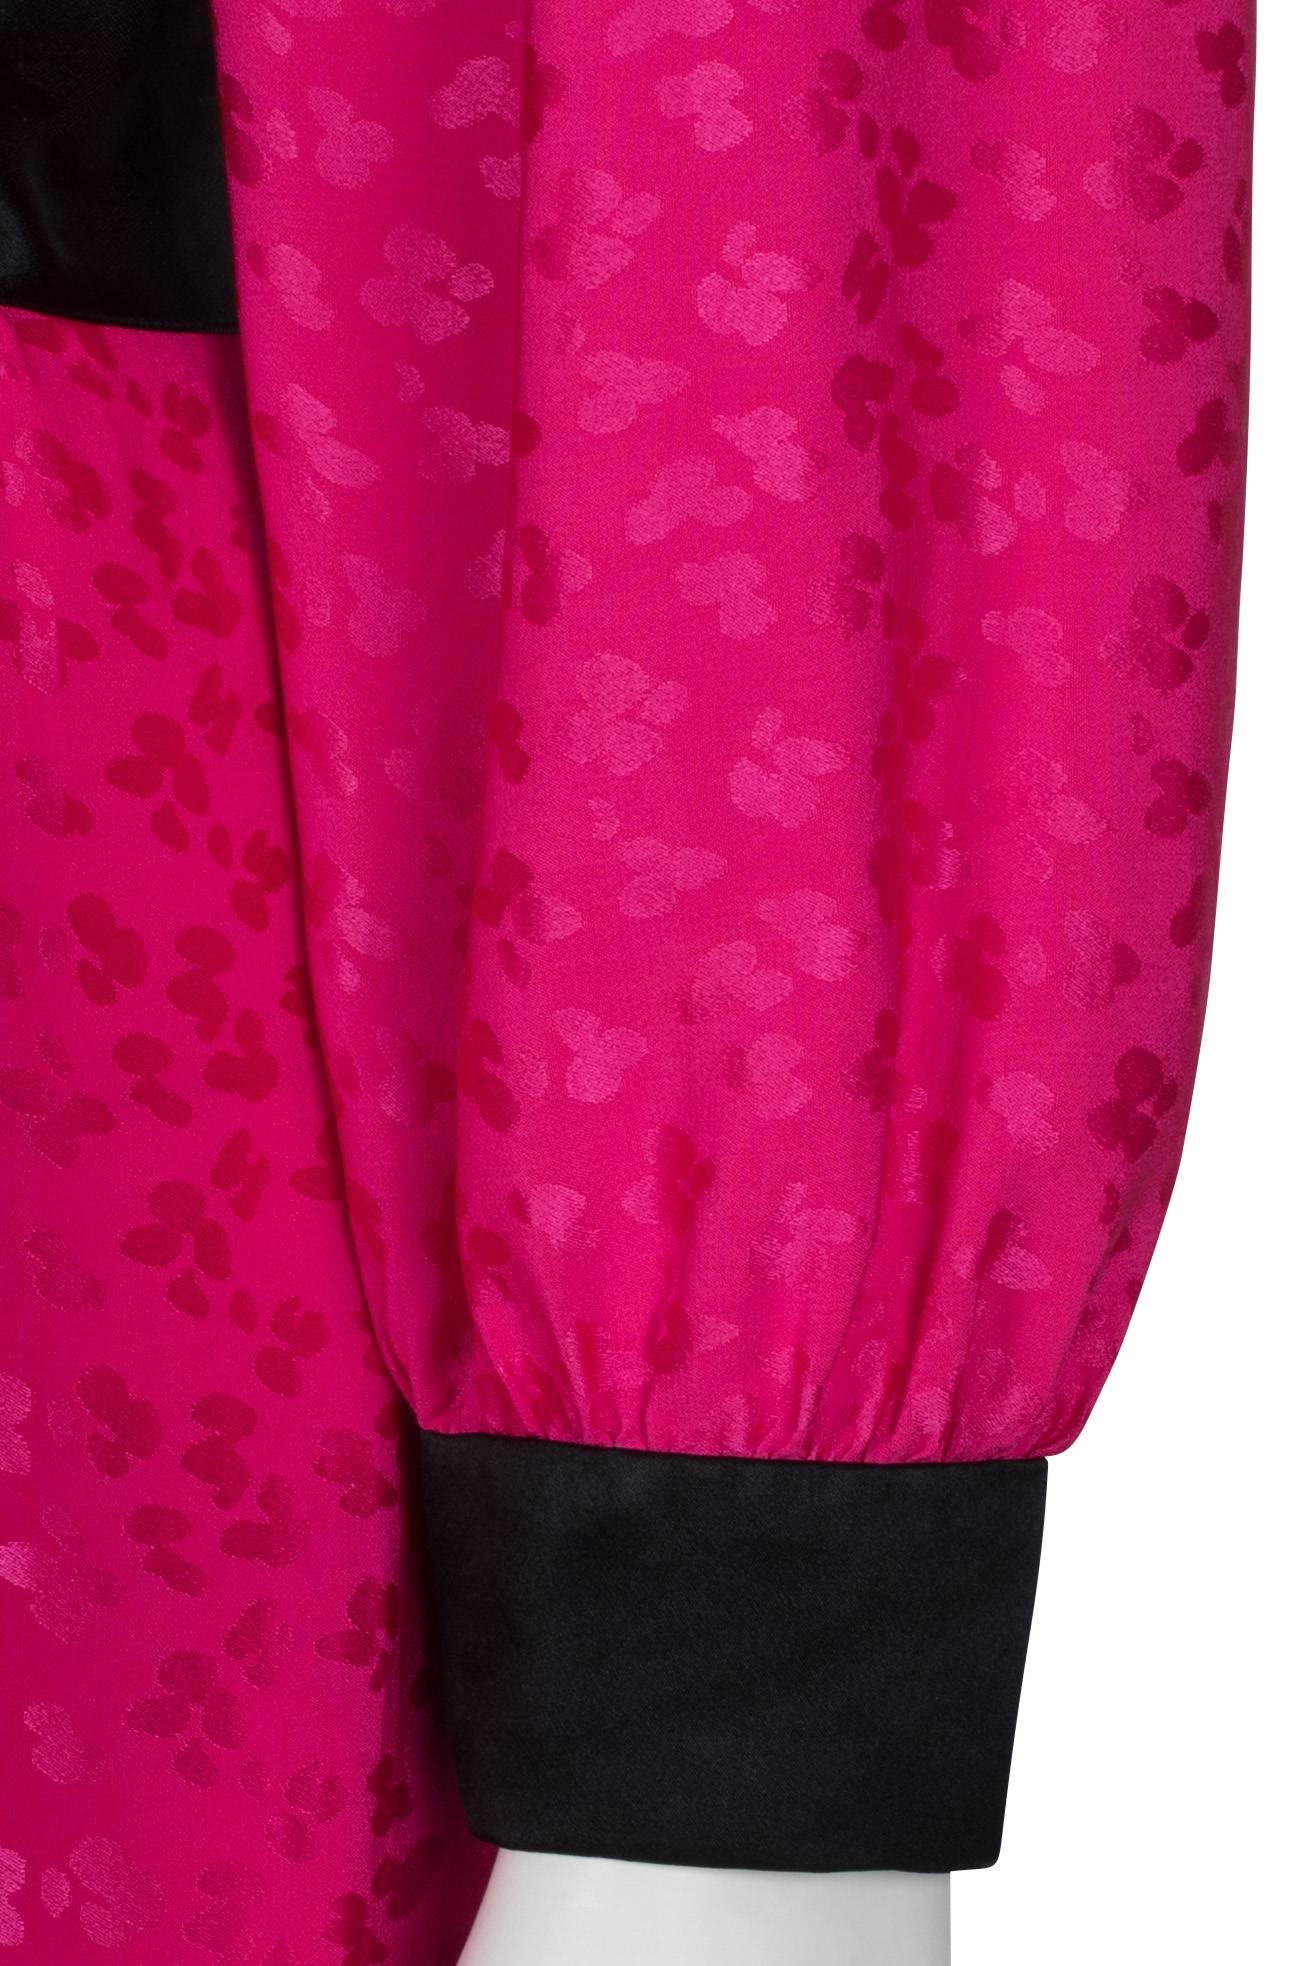 Emanuel Ungaro Hot Pink Silk Wrap Dress ca 1980 For Sale 4